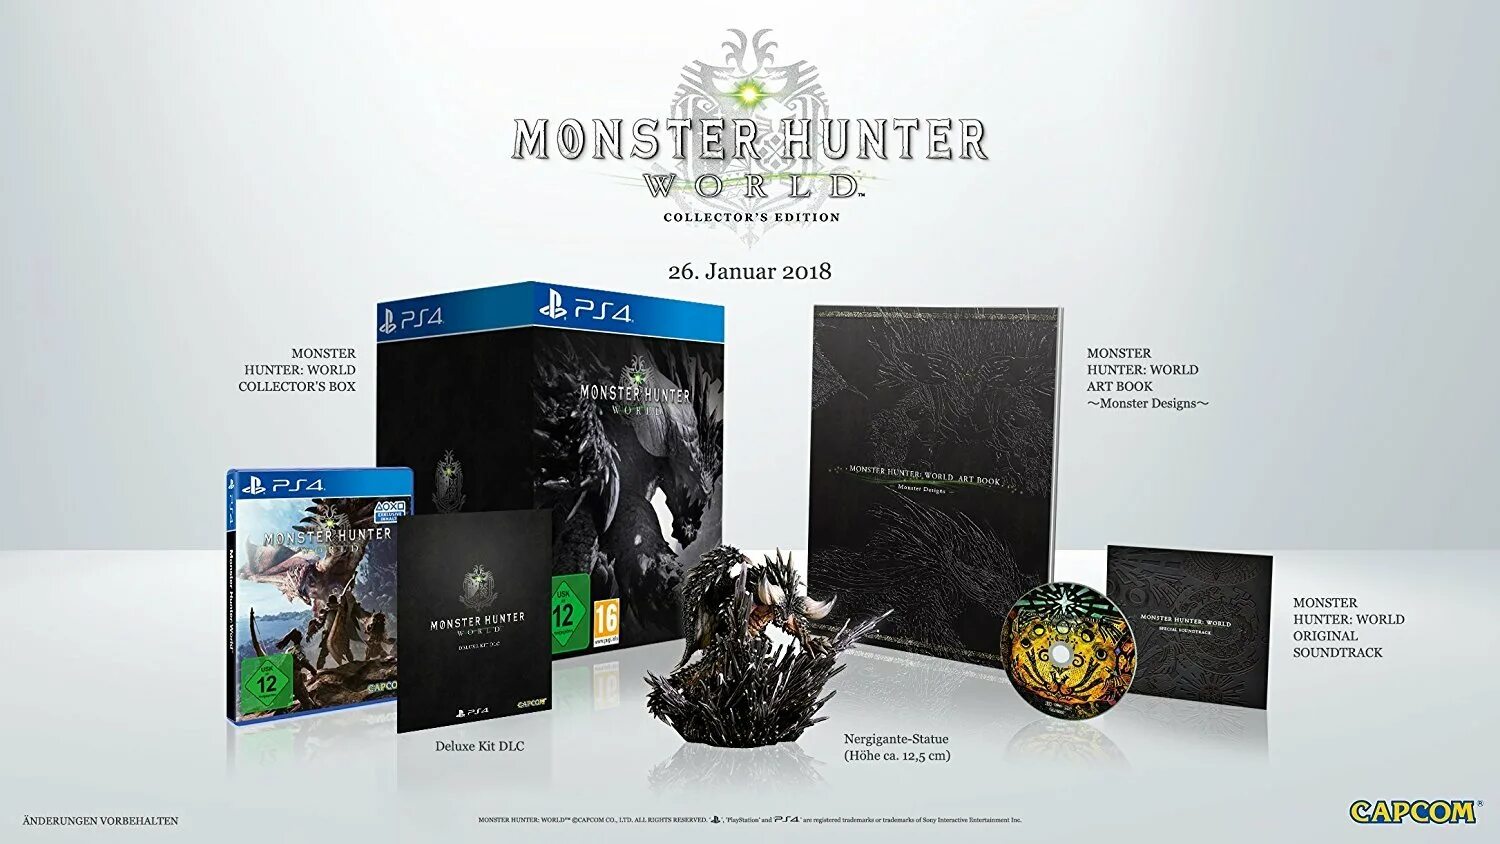 Monster Hunter Collector's Edition. Монстр Хантер Делюкс. Monster Hunter World isborn коллекционное издание. Иксбокс монстр. Montana collection edition